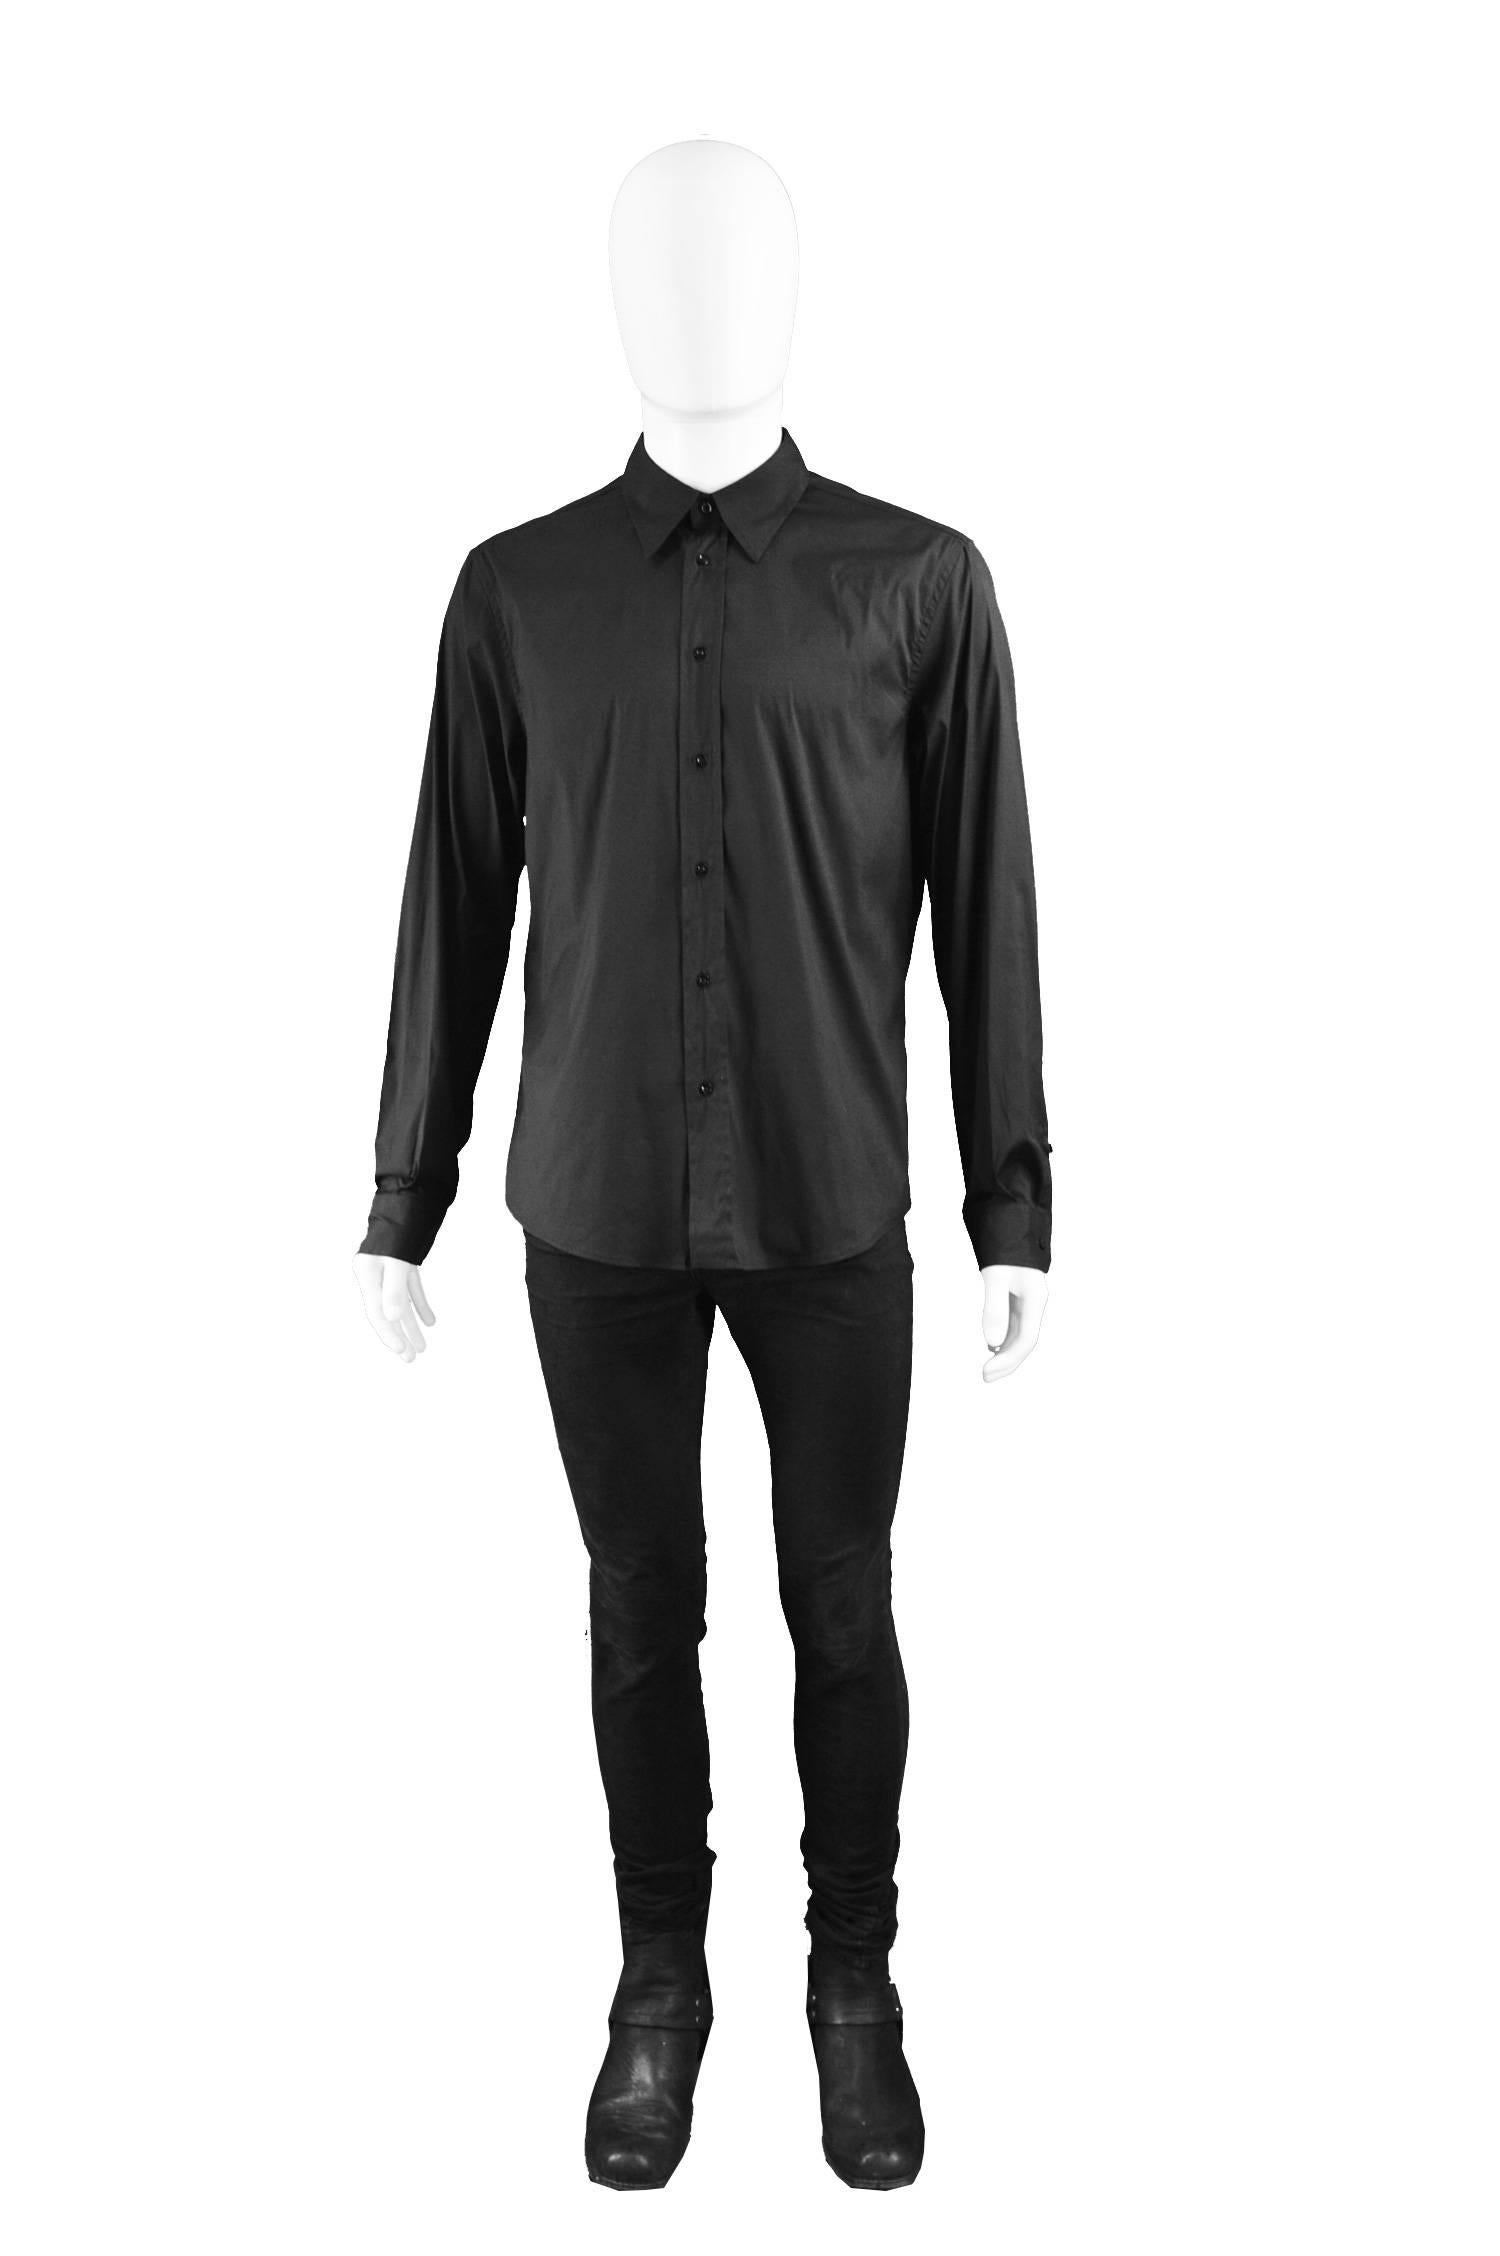 John Richmond Men's Embellished Studded & Beaded Black Skull Shirt

Size: Marked 50 which is roughly a men’s Medium to Large. Please check measurements.
Chest - 42” / 106cm
Length (Shoulder to Hem) - 25” / 63cm
Shoulder to Shoulder - 19” /